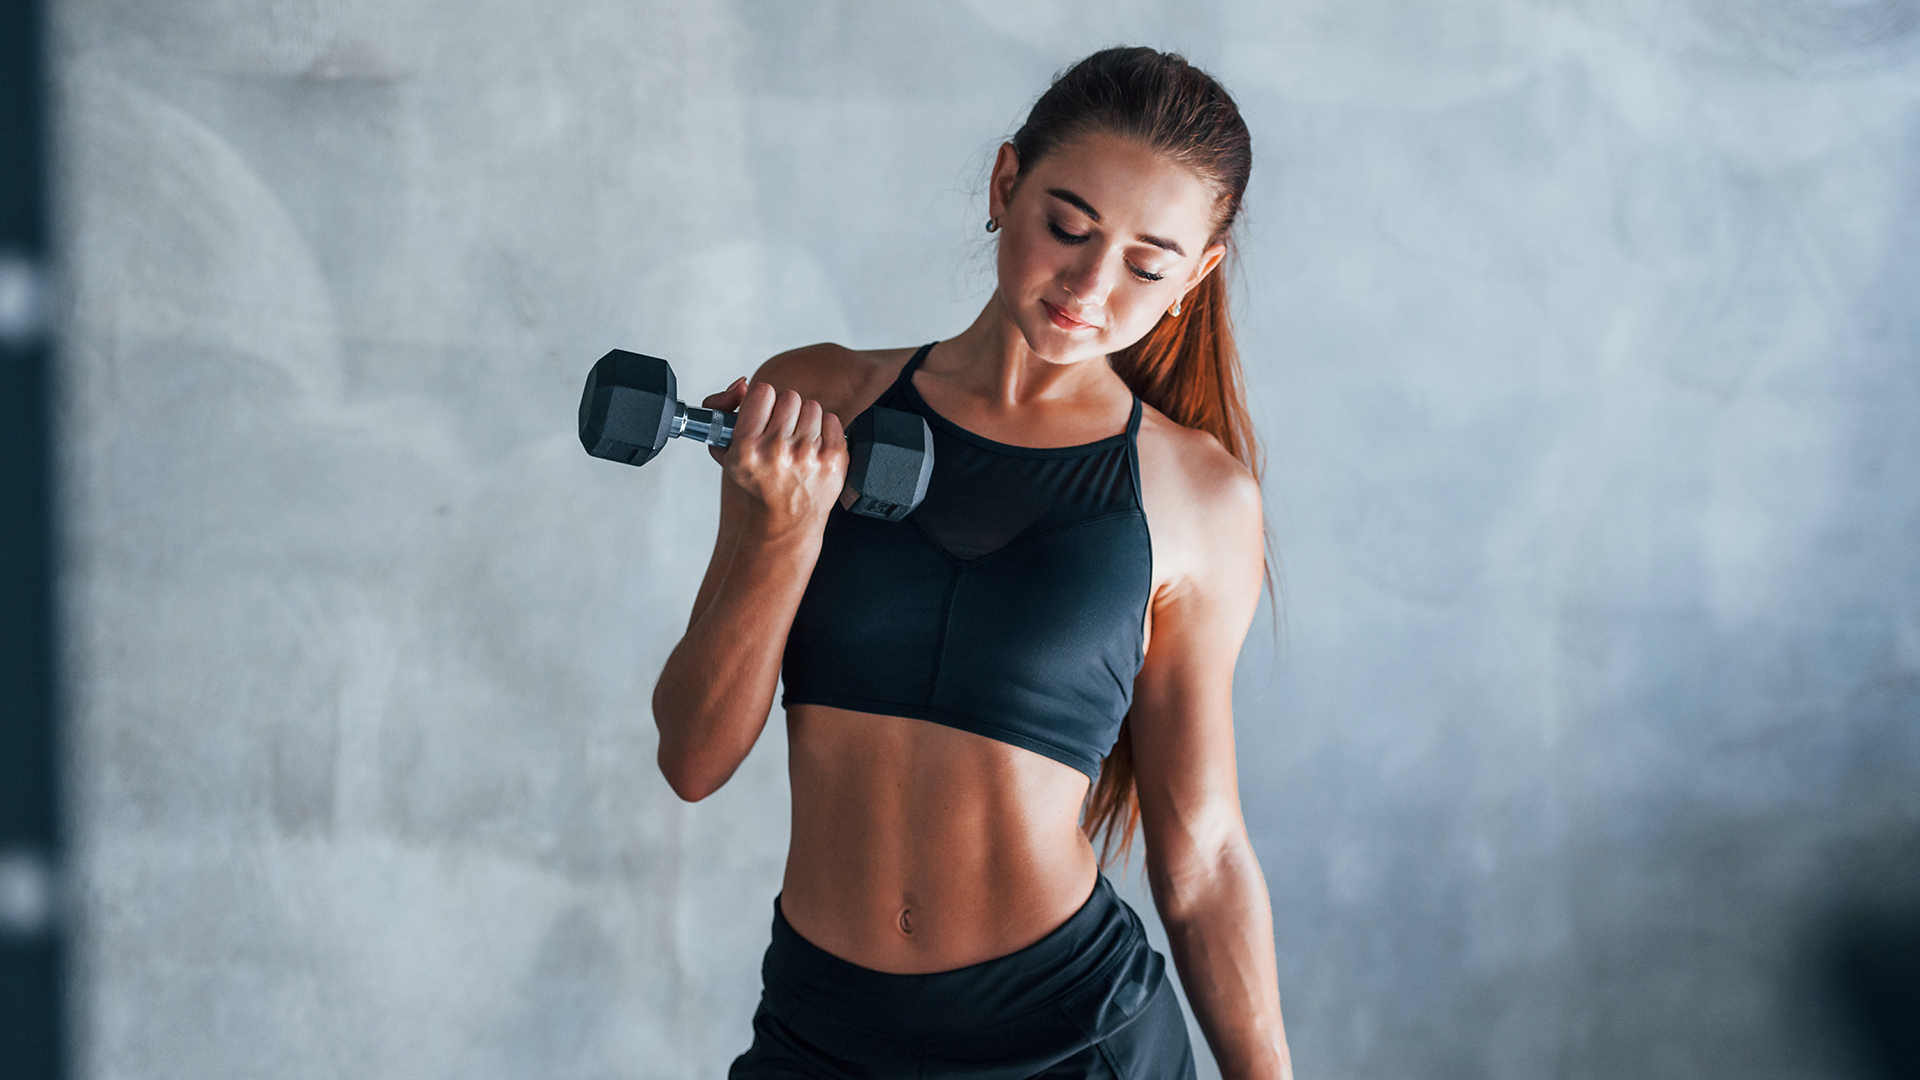 The Best Biceps Exercises For Women